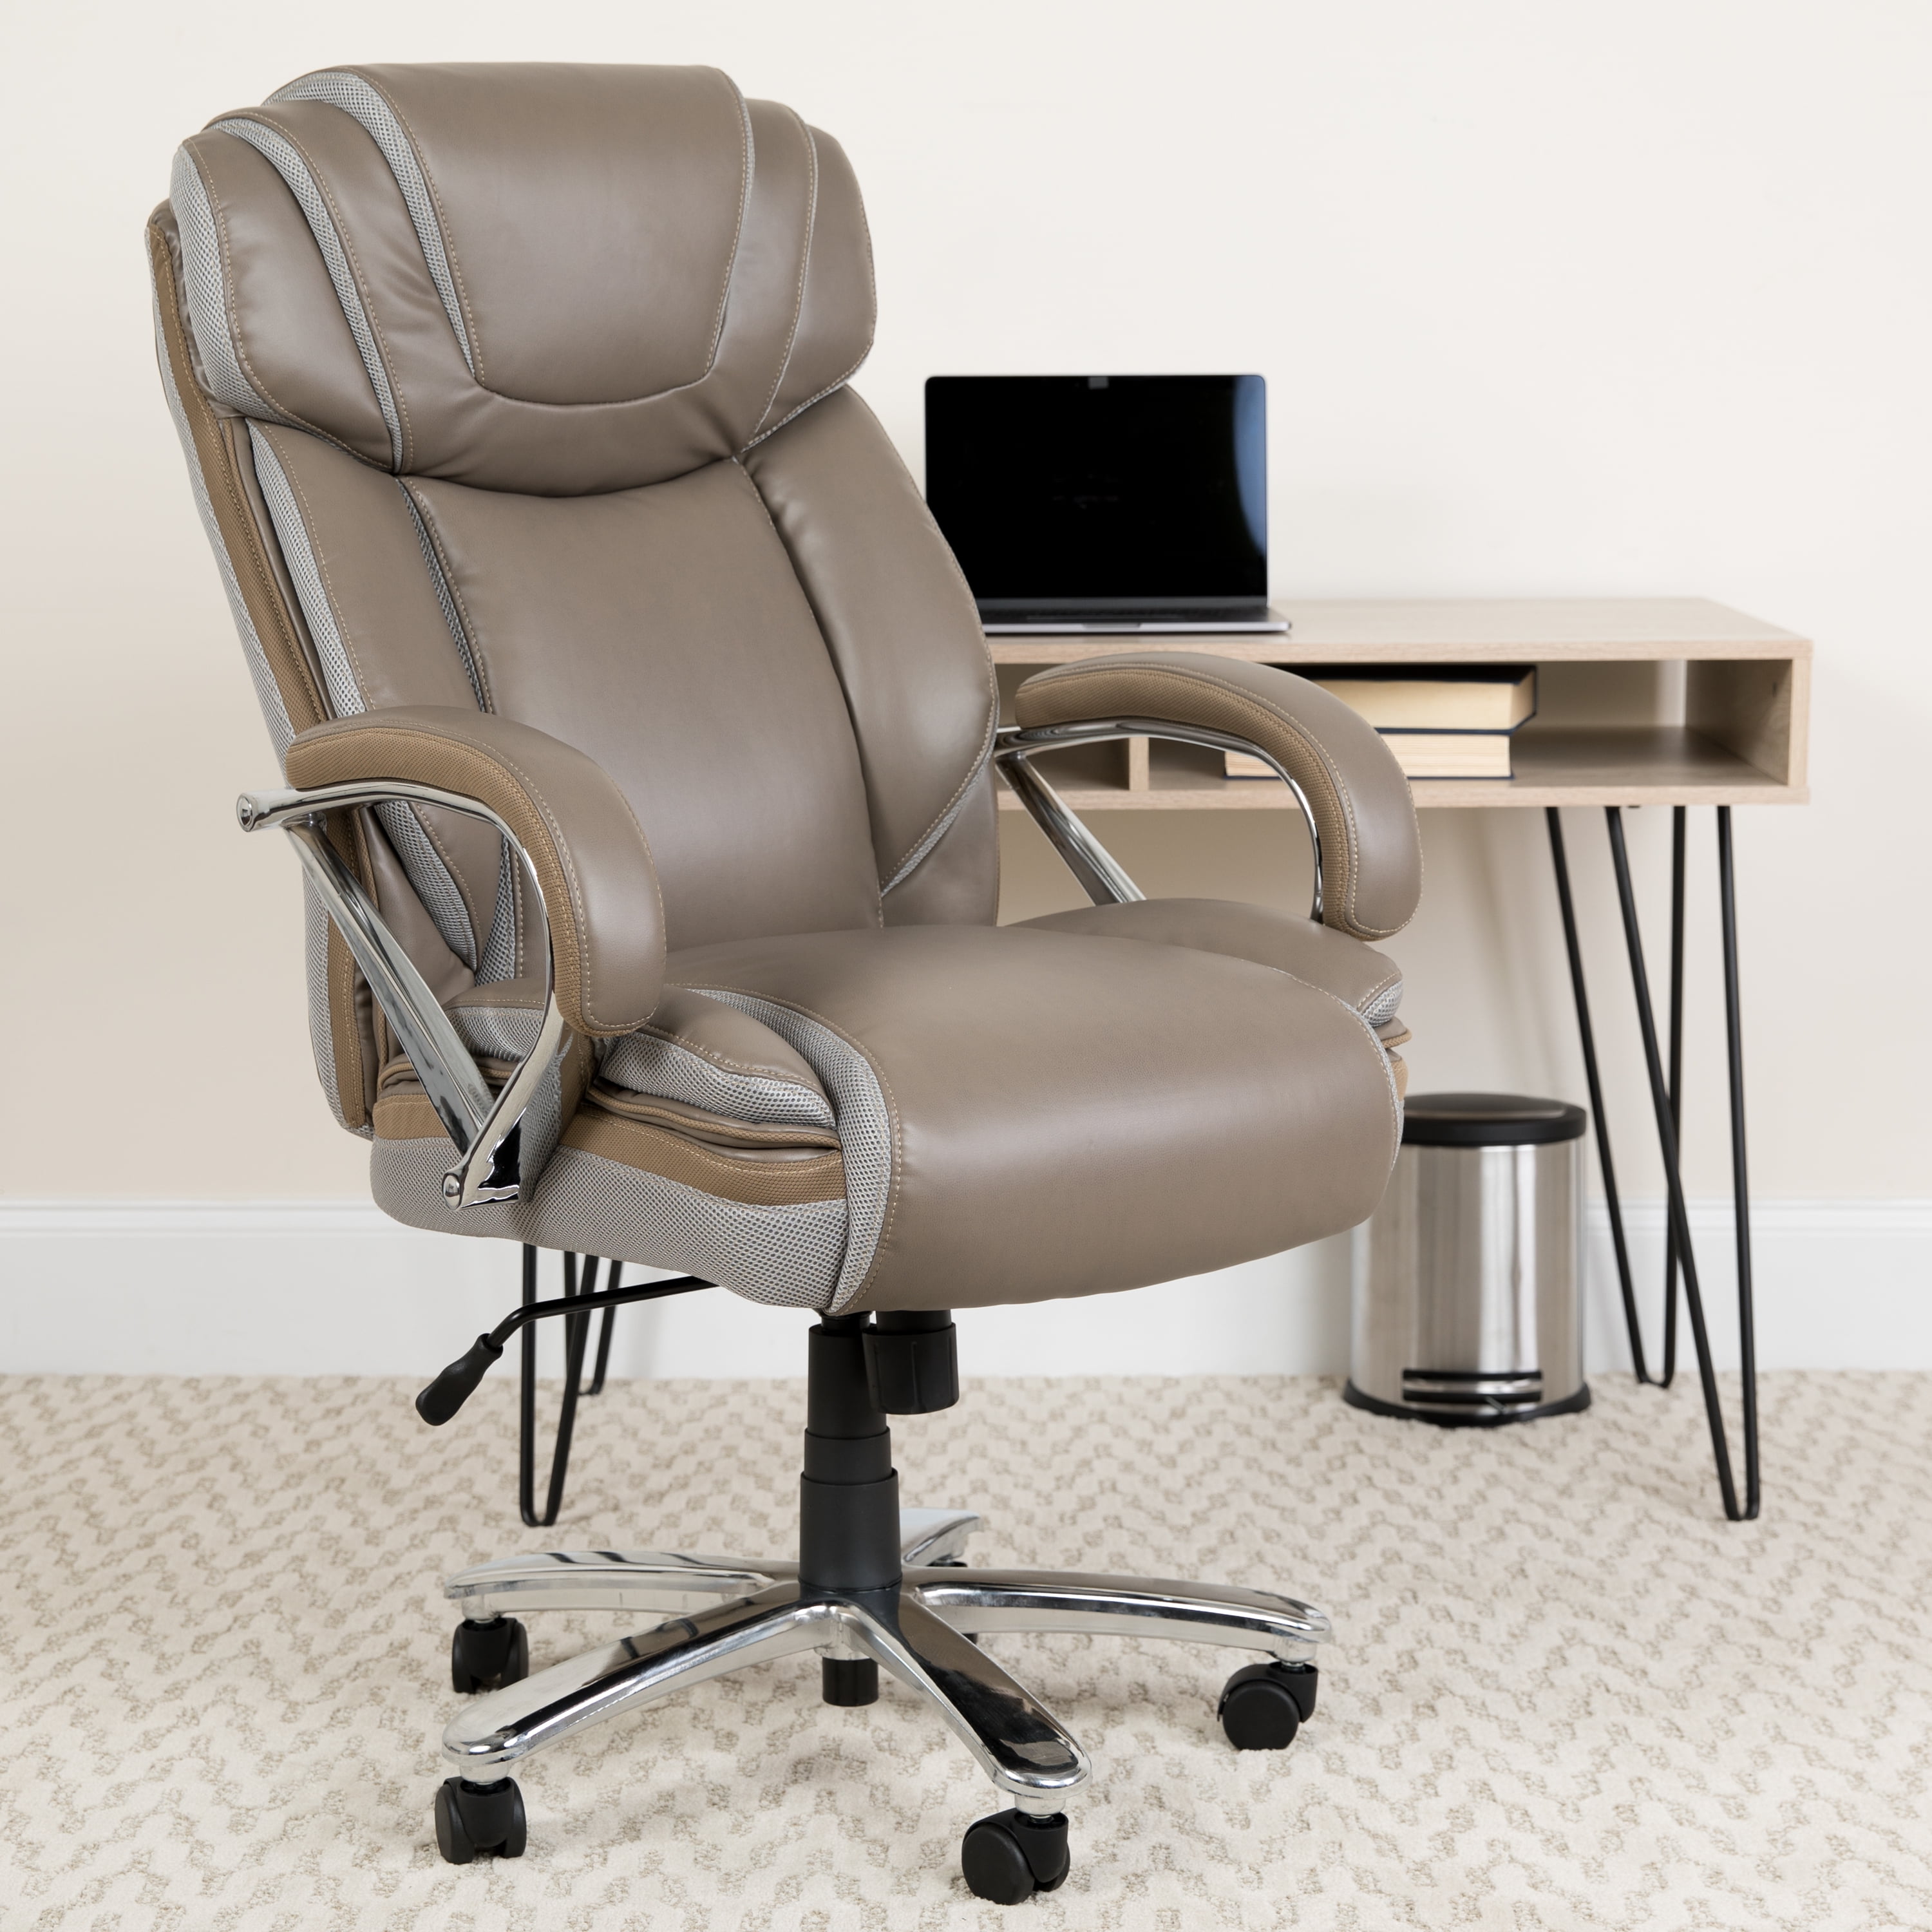 500 lbs office chair